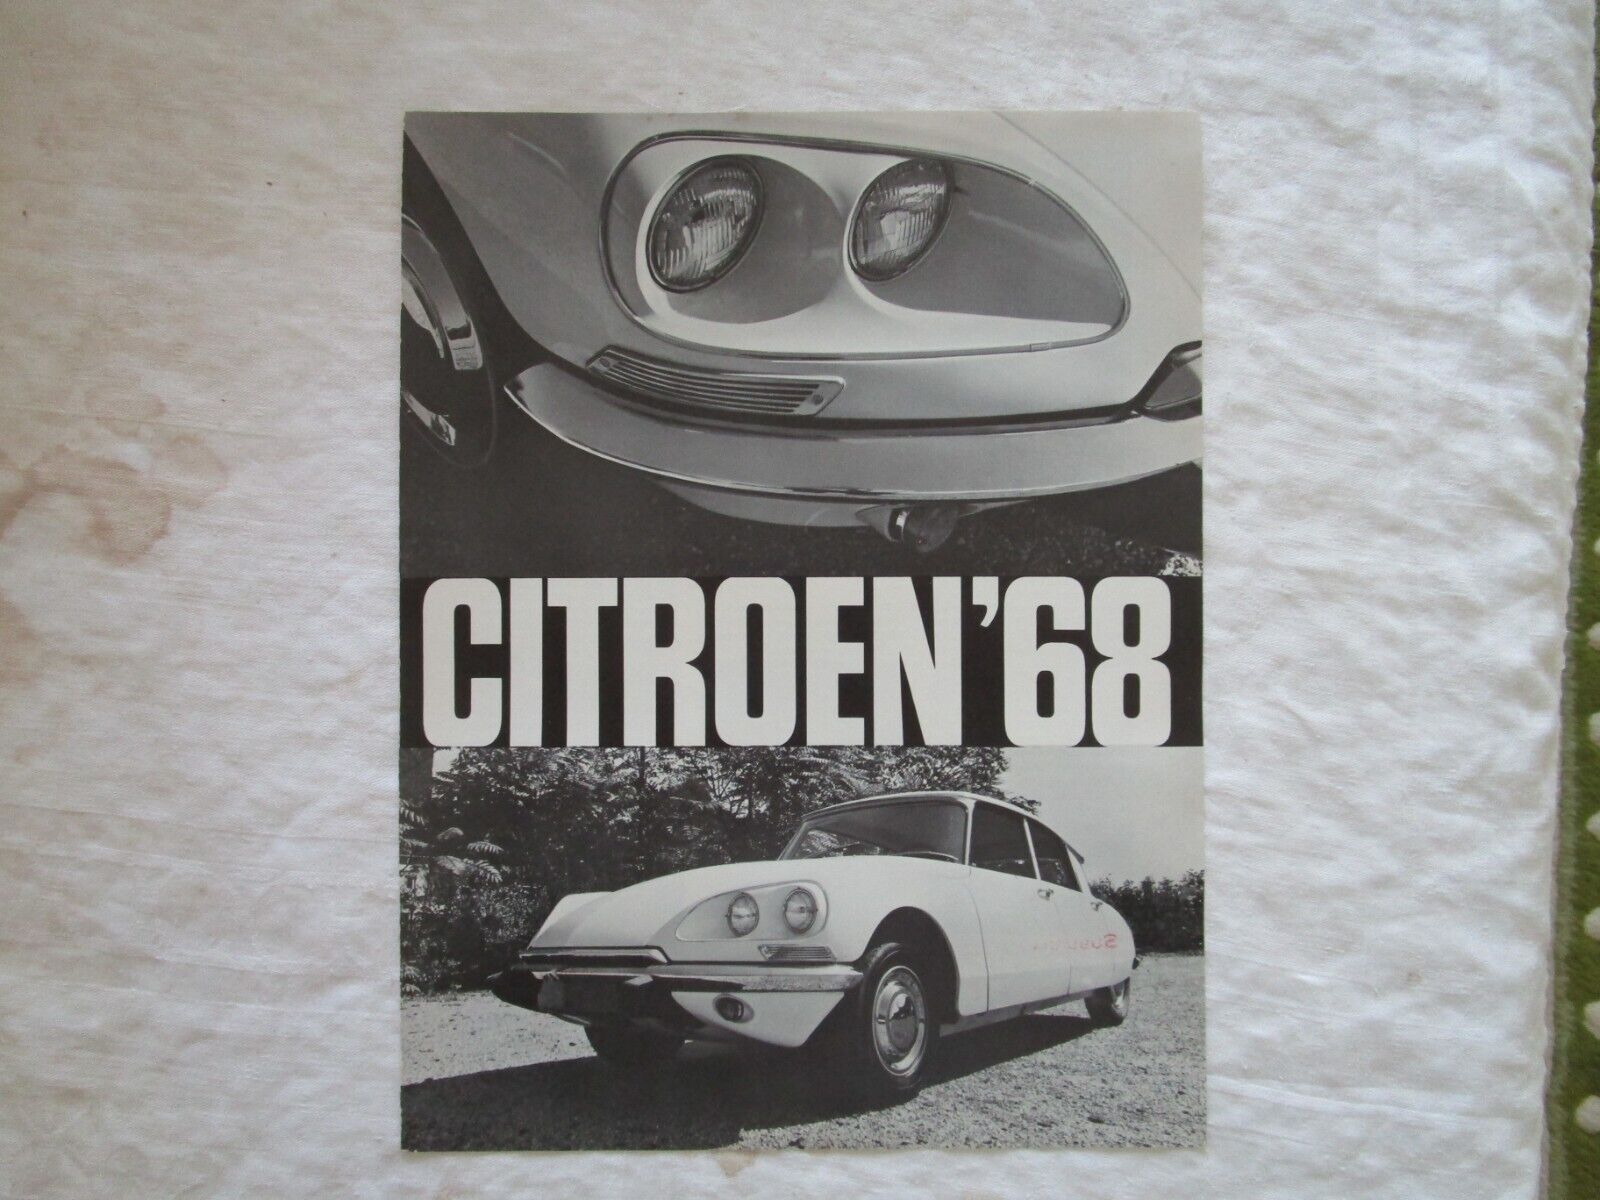 1968 Citroen Sales Brochures (2) showing sedan and station wagon